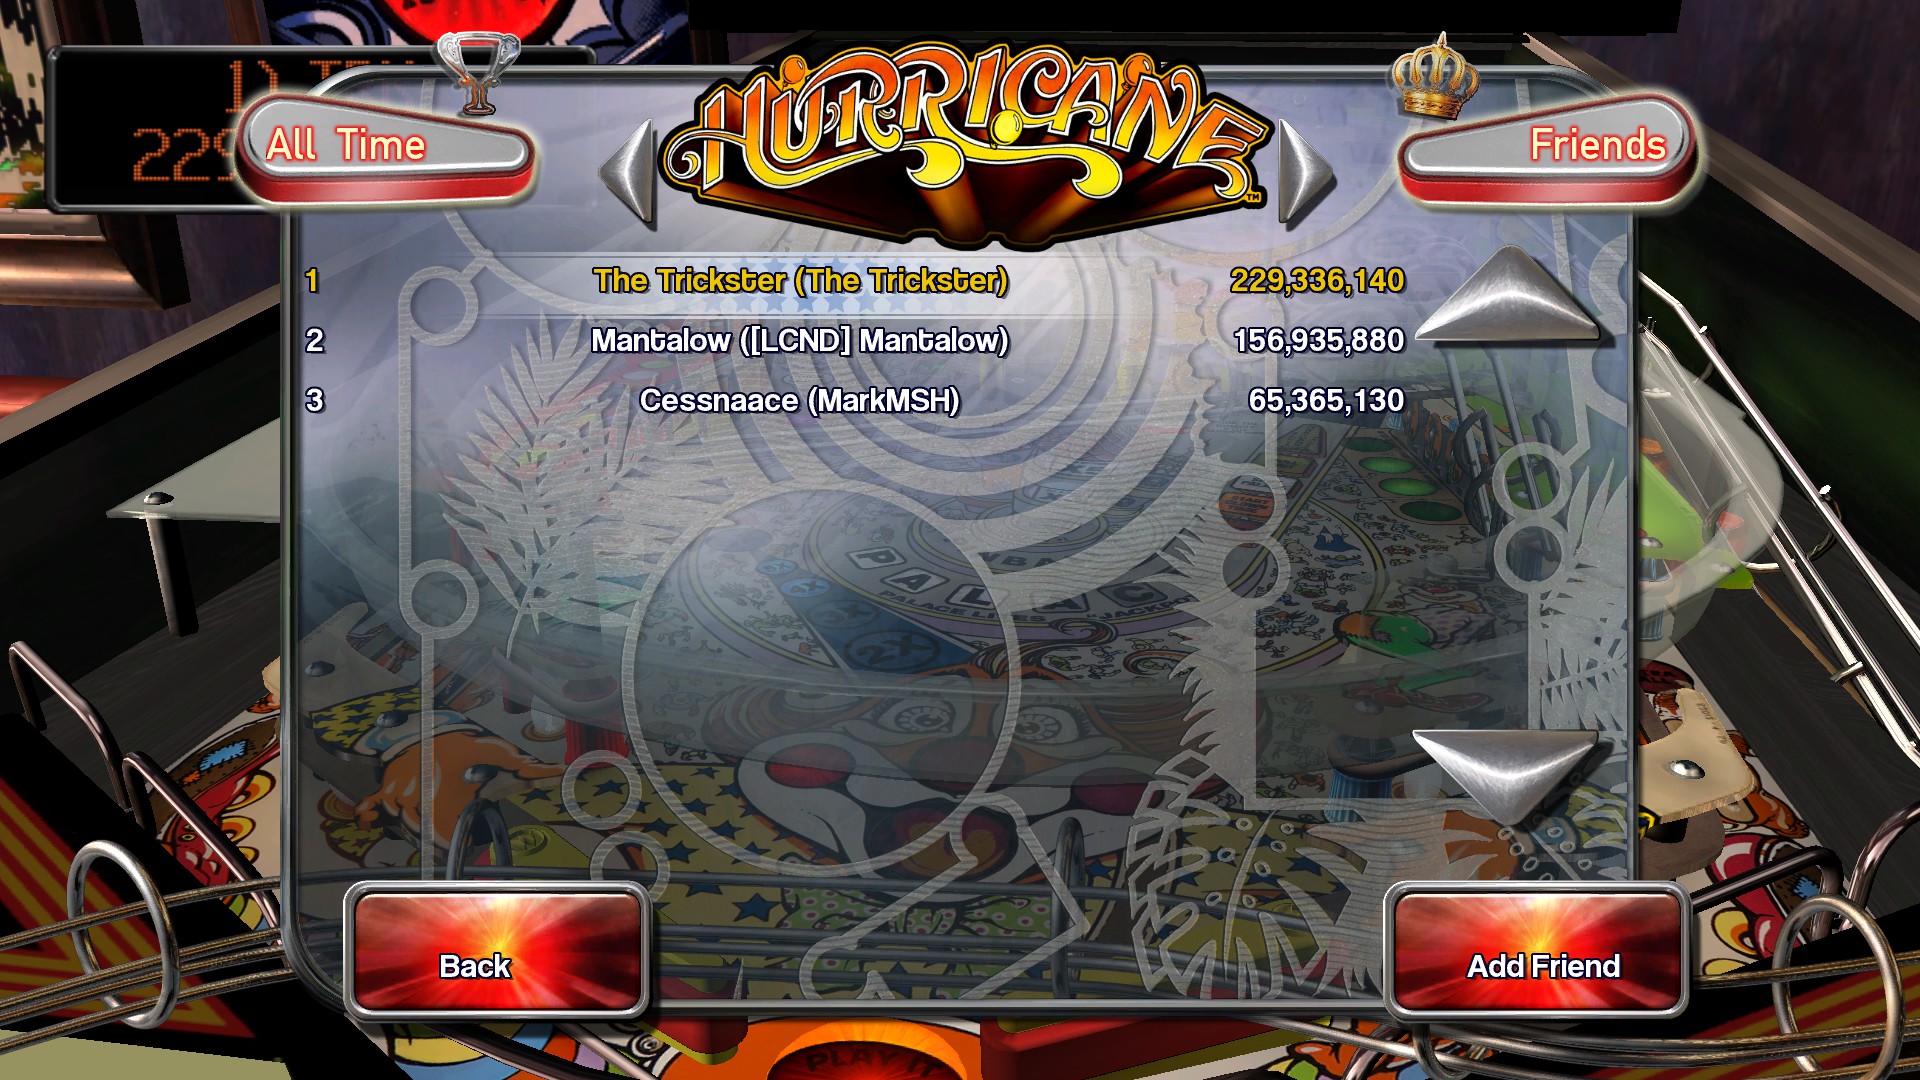 TheTrickster: Pinball Arcade: Hurricane (PC) 229,336,140 points on 2016-04-21 07:44:08